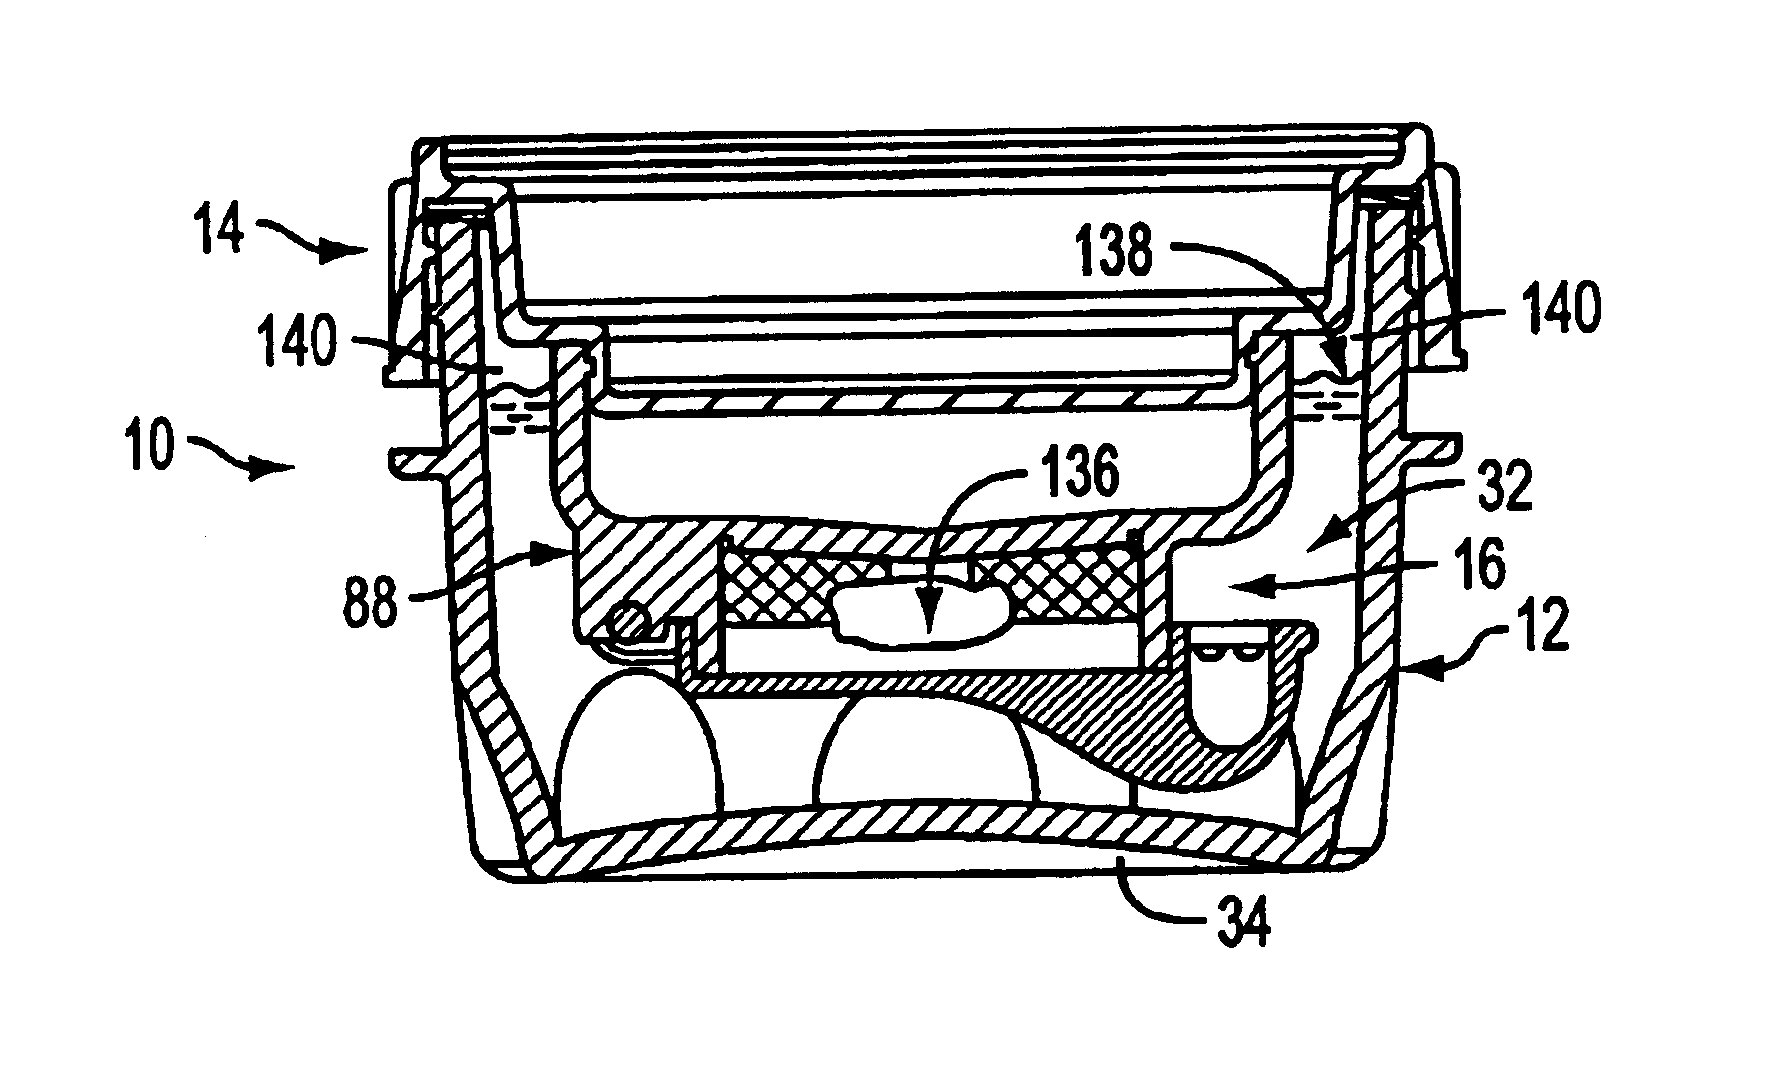 Method and basket apparatus for transporting biological samples